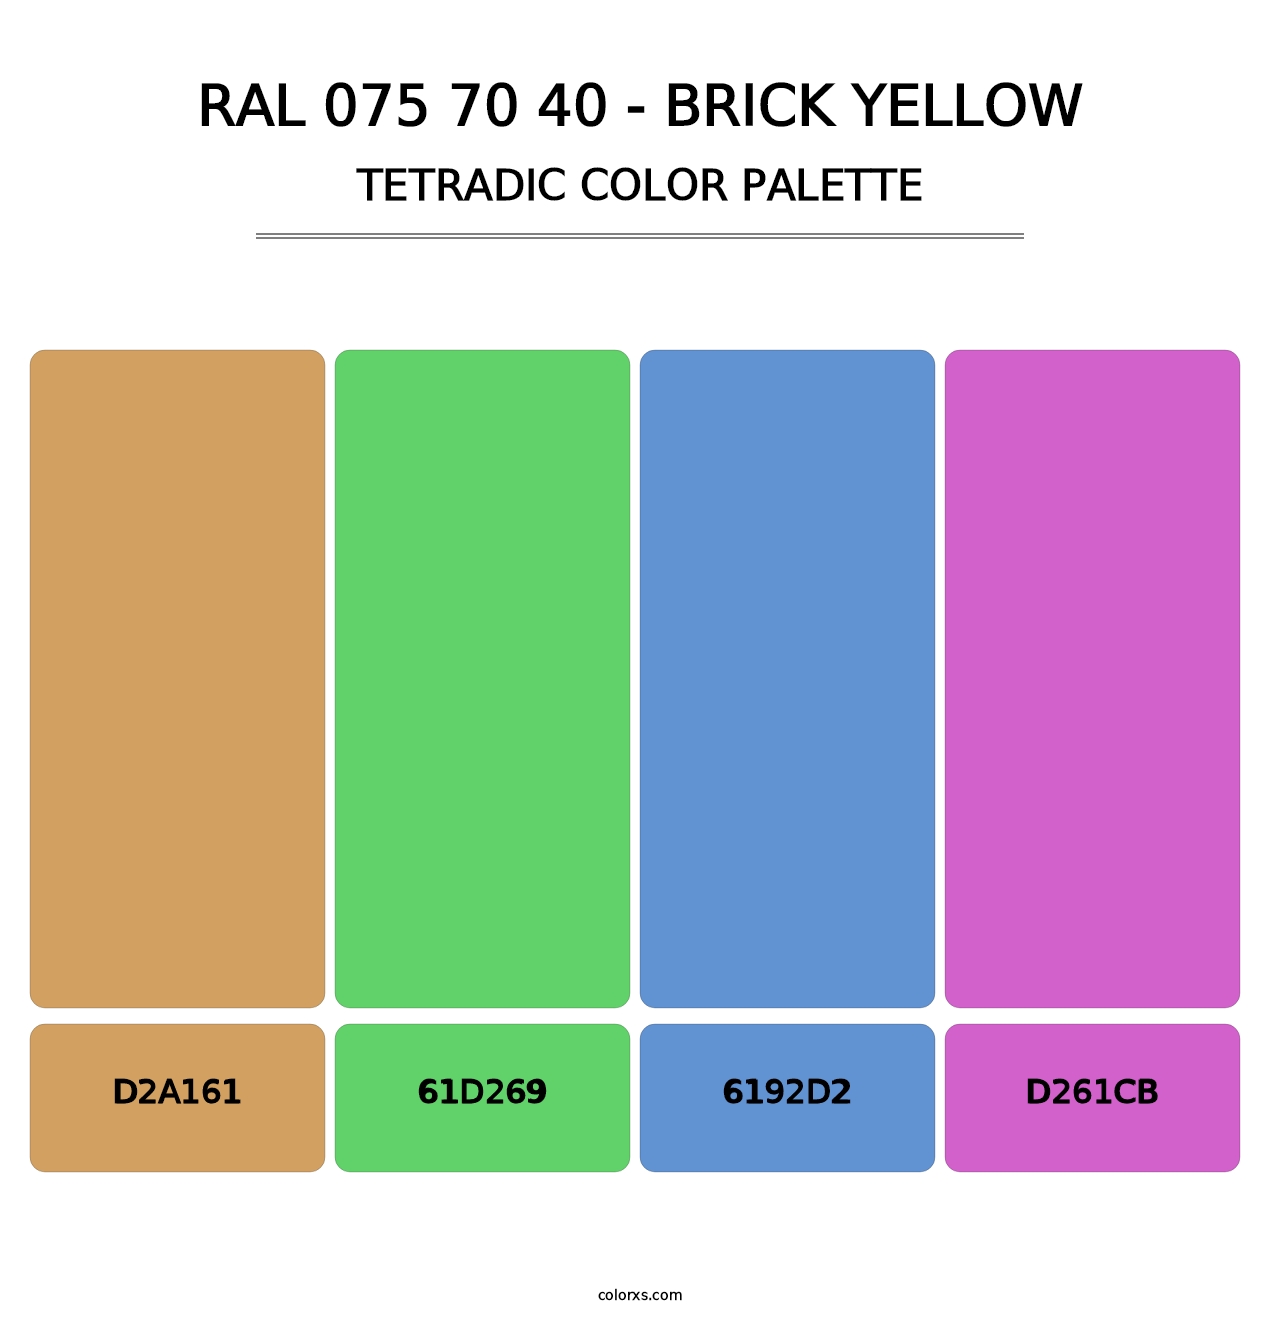 RAL 075 70 40 - Brick Yellow - Tetradic Color Palette